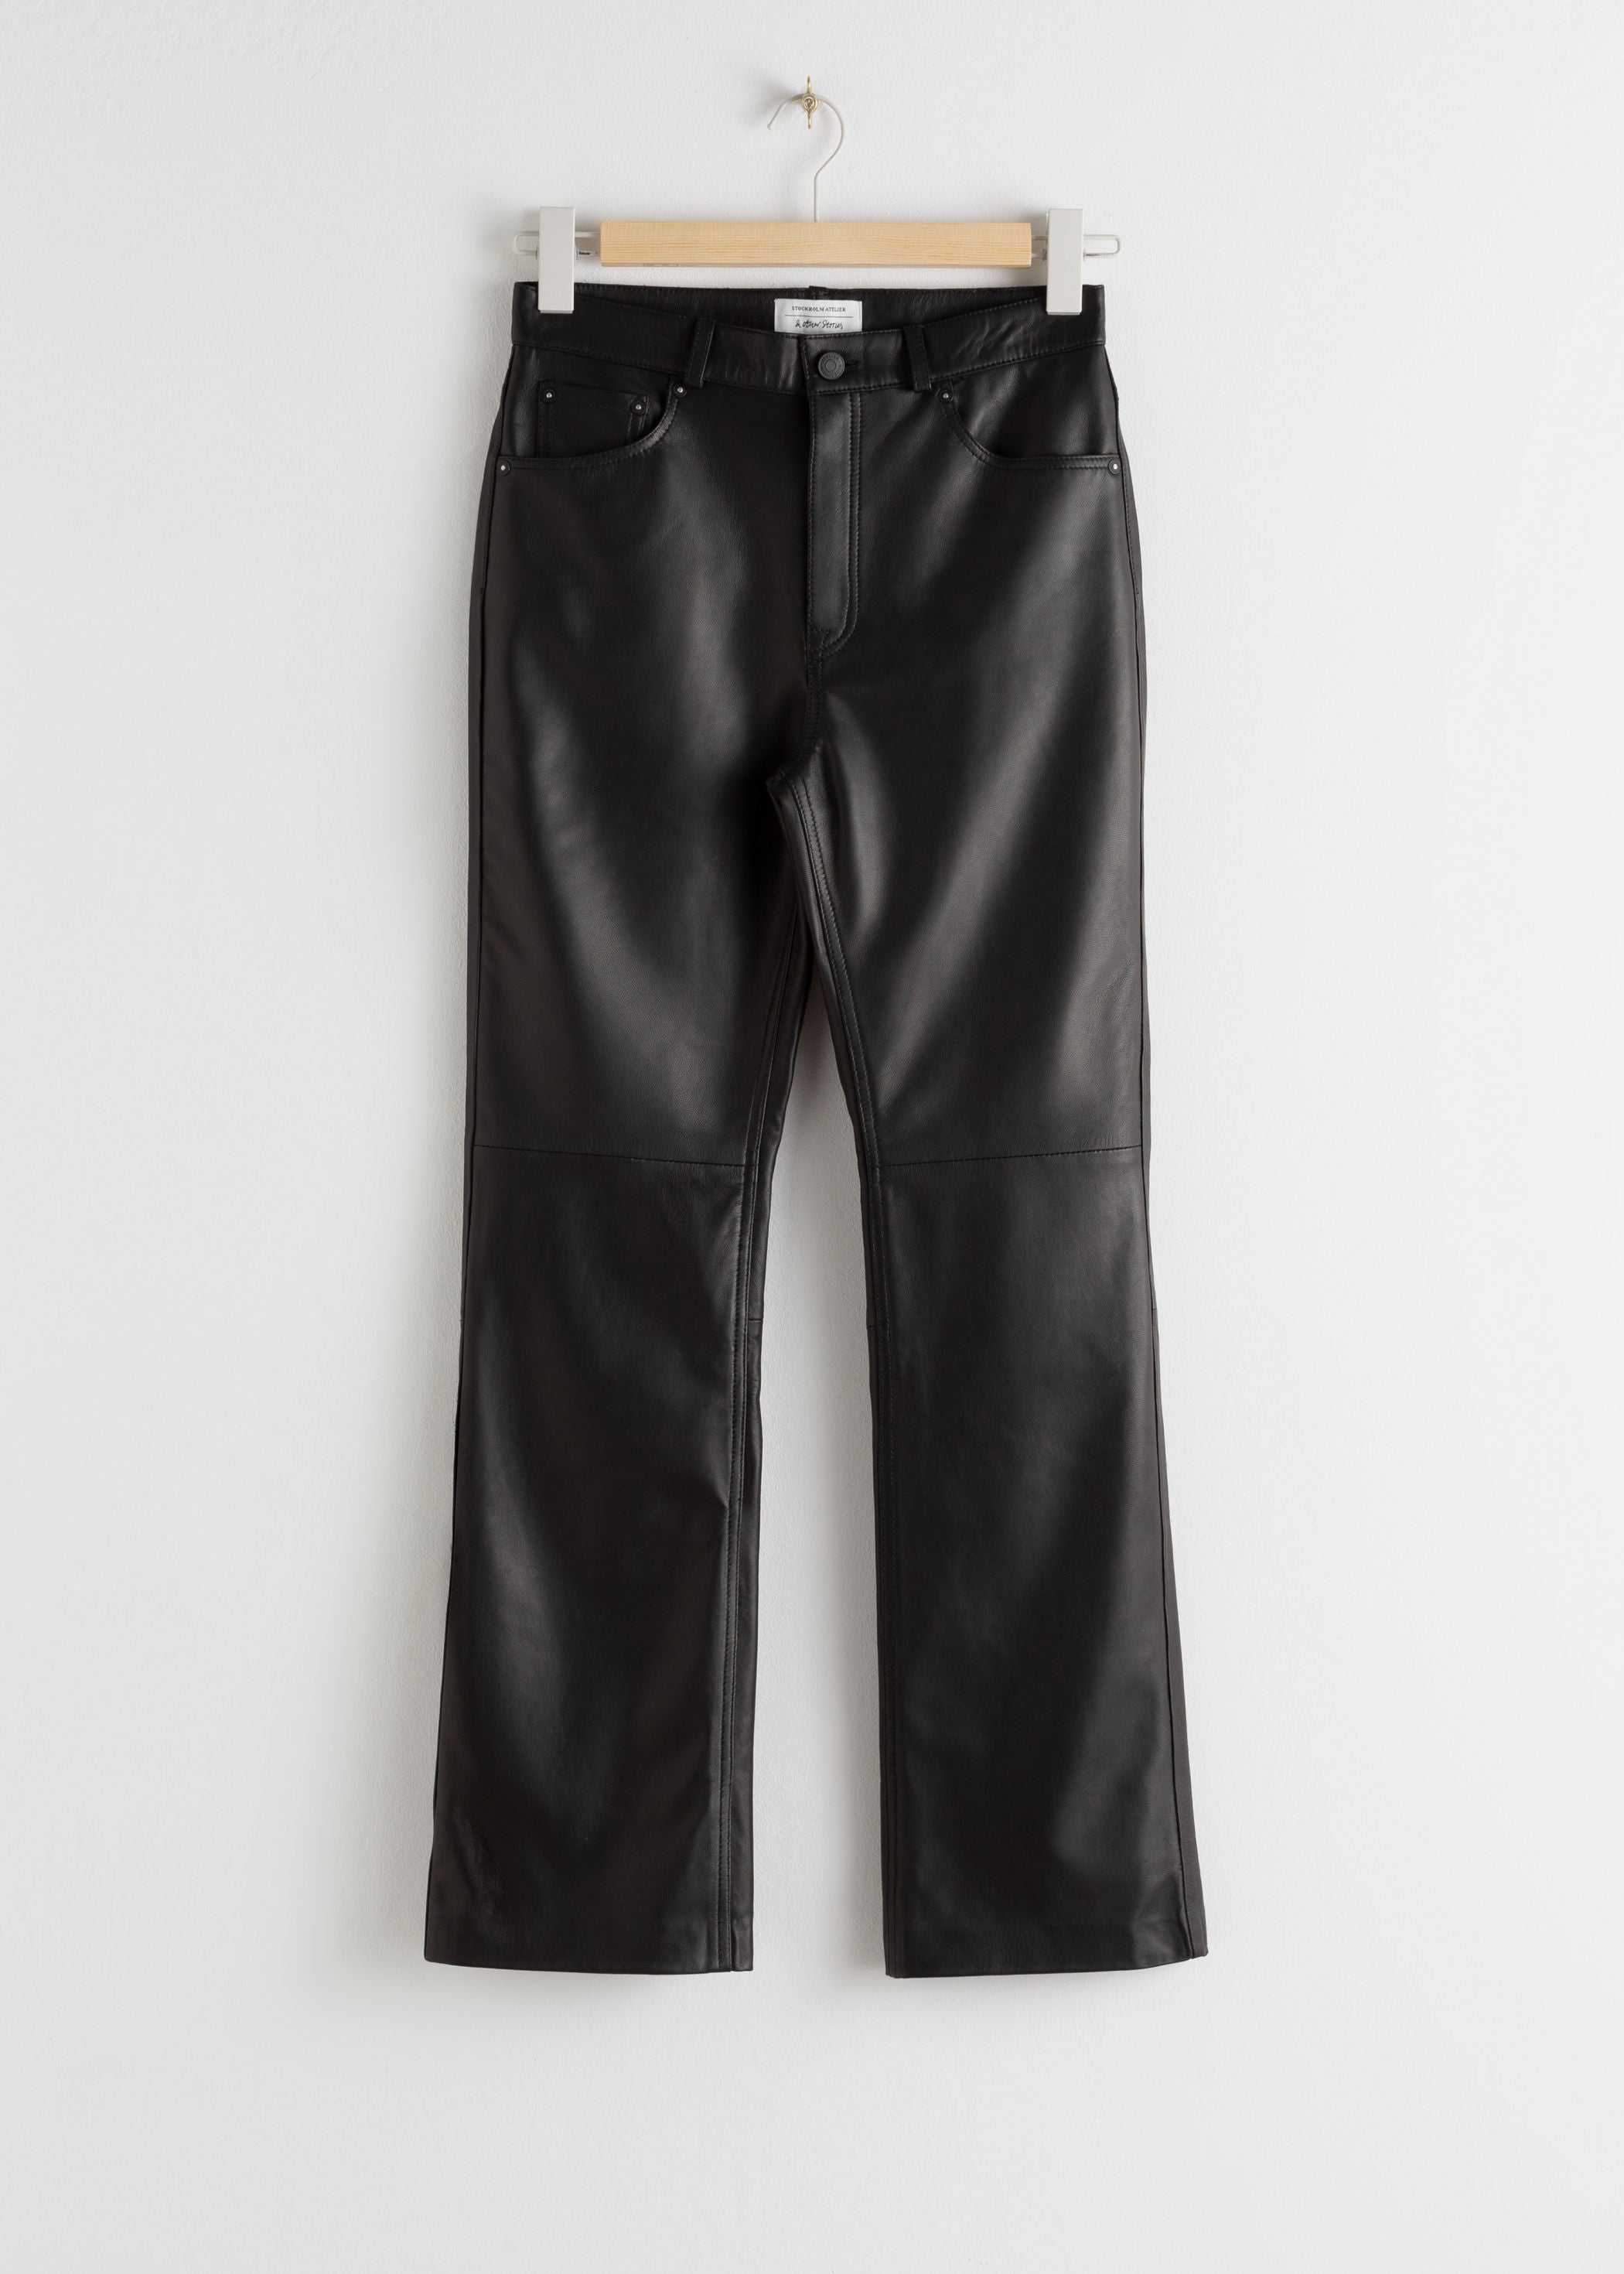 black leather pants cheap